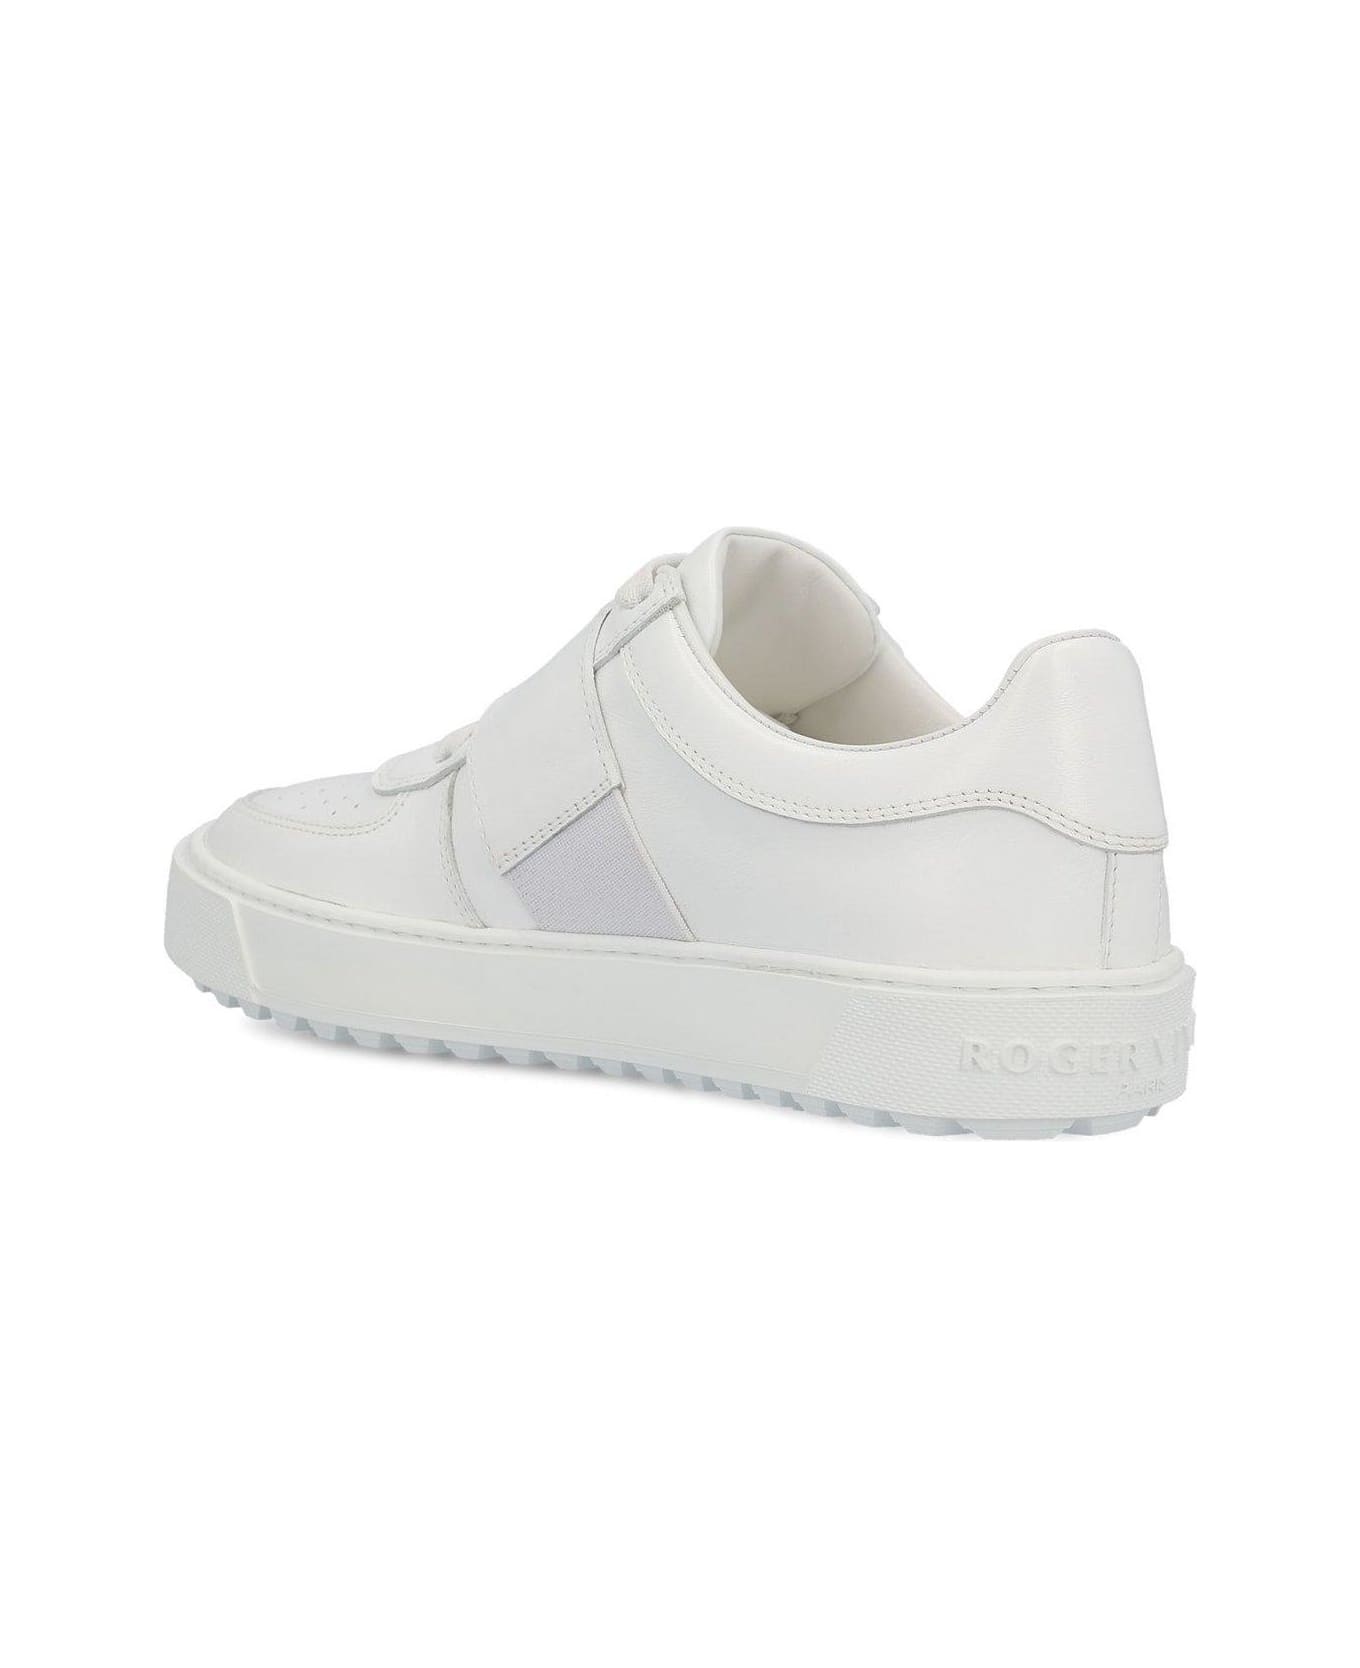 Roger Vivier Embellished Buckle Sneakers - White